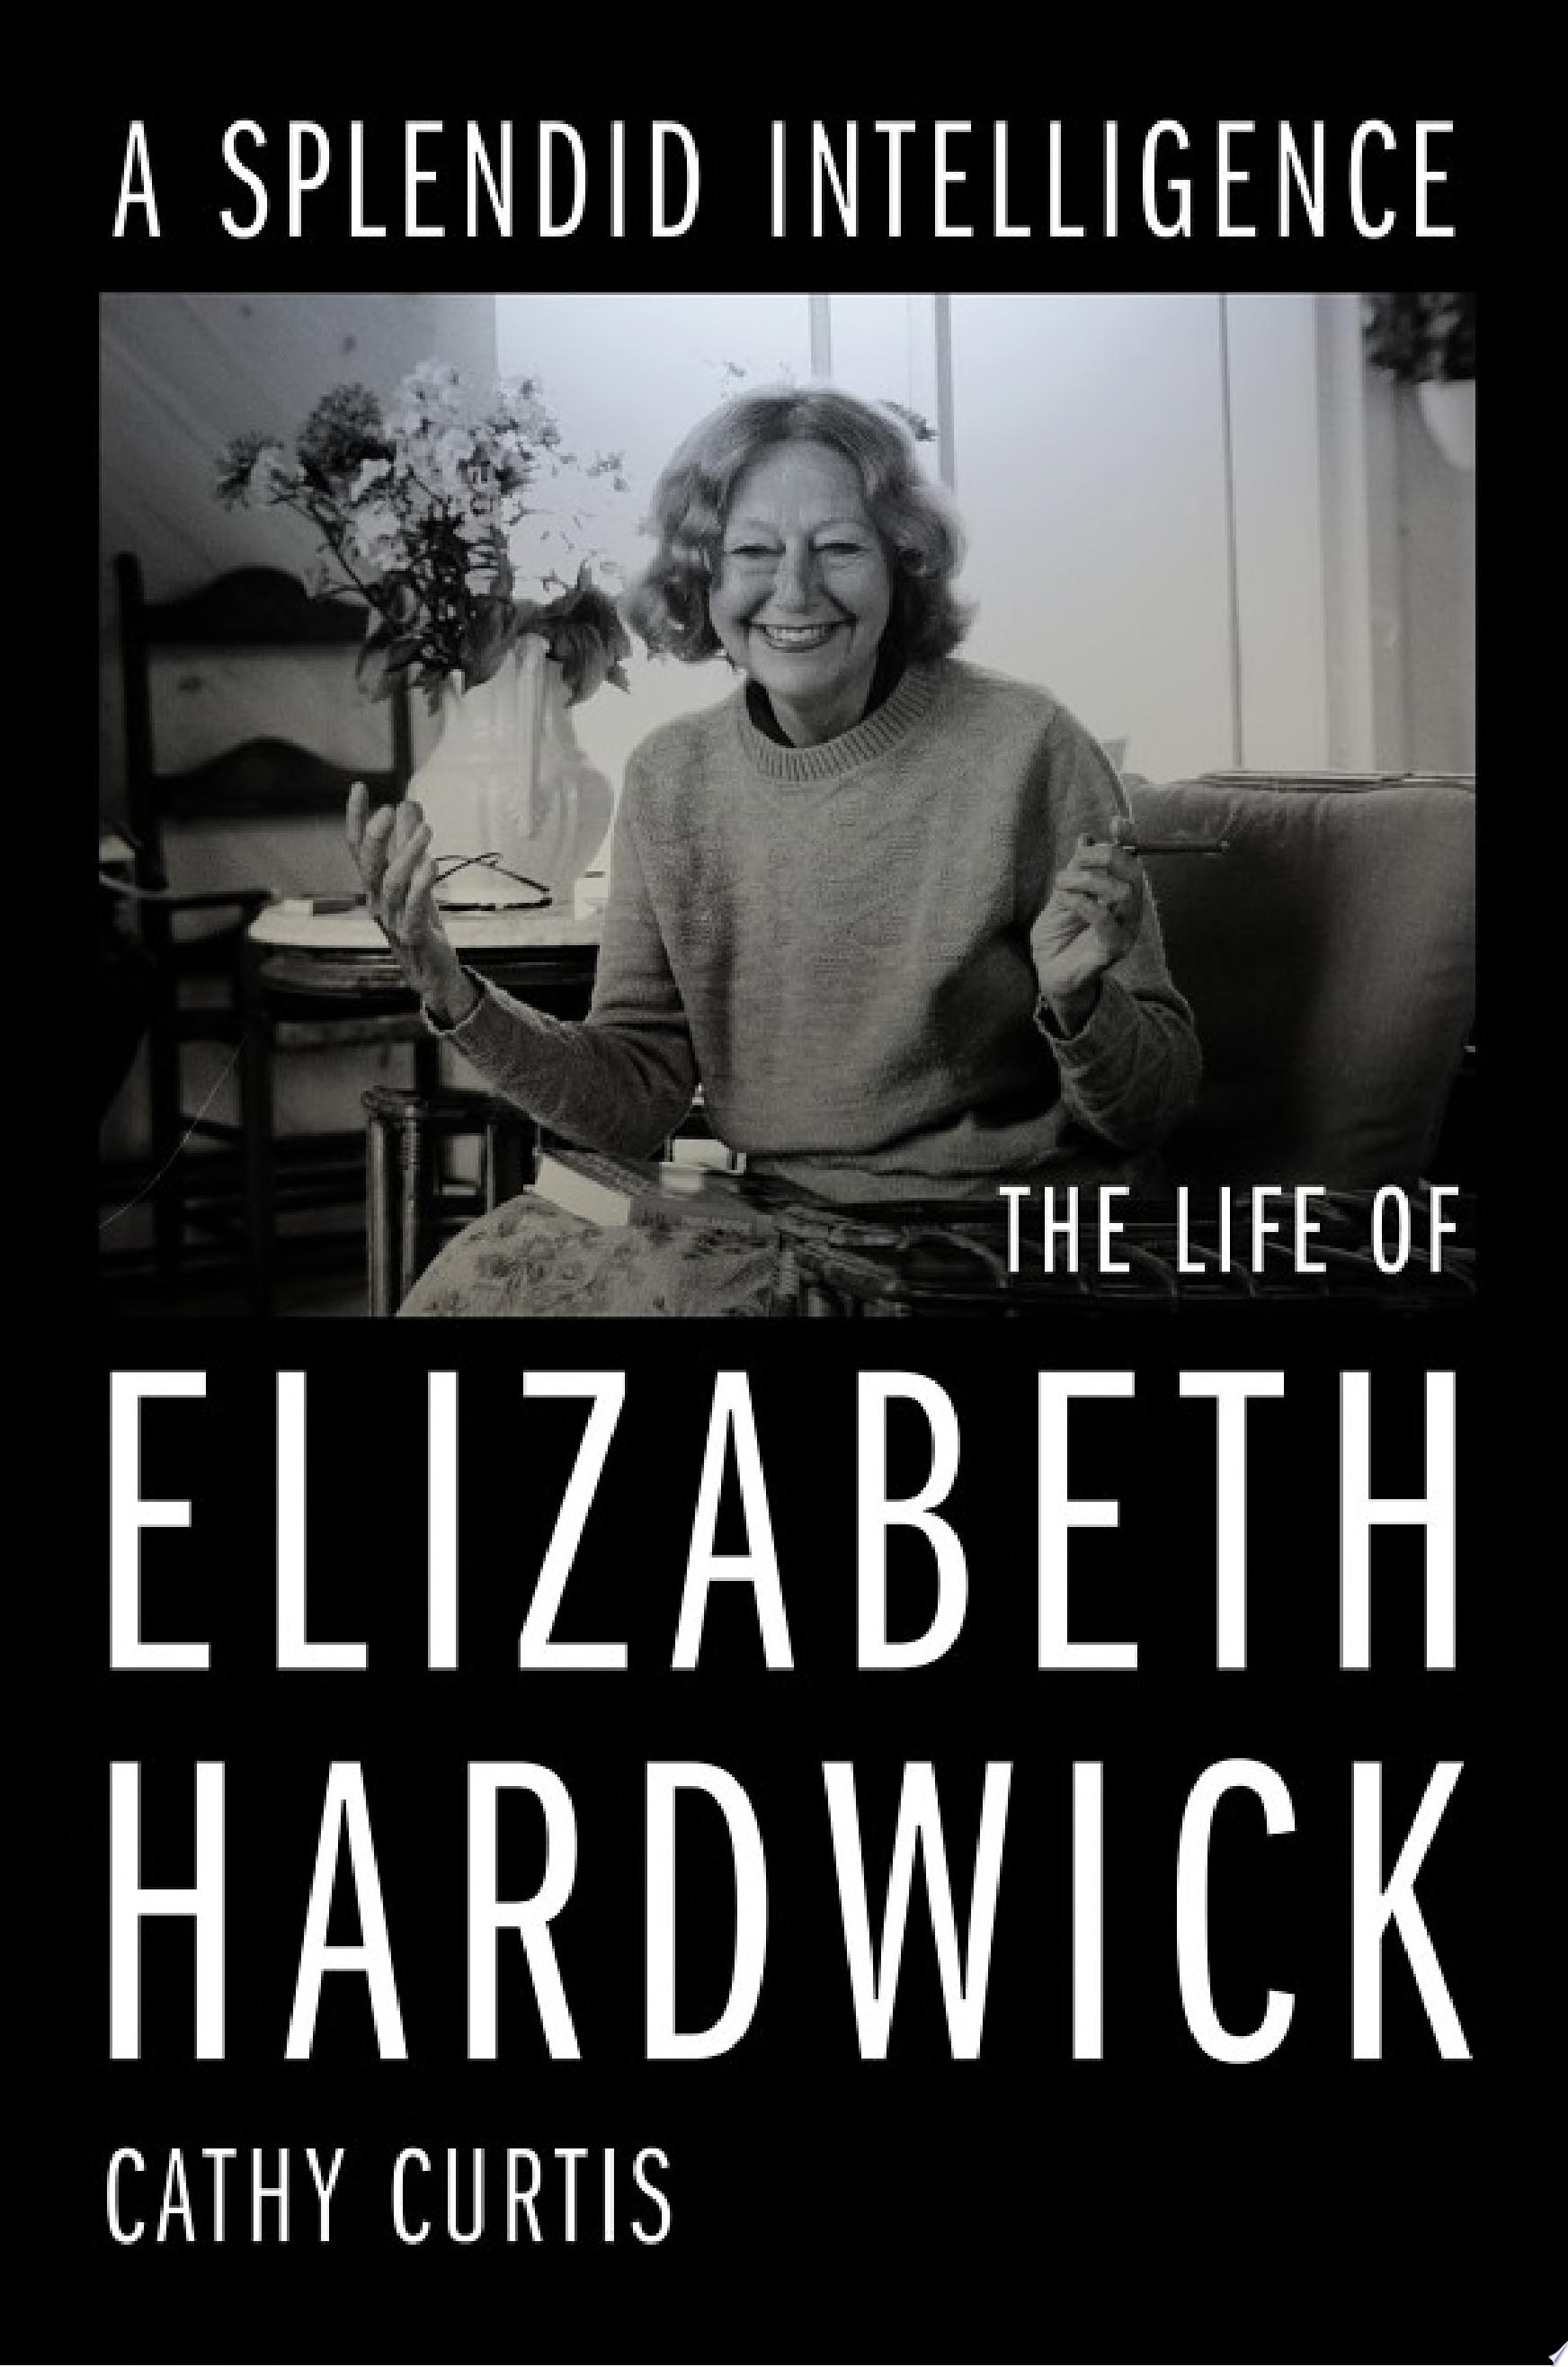 Image for "A Splendid Intelligence: The Life of Elizabeth Hardwick"